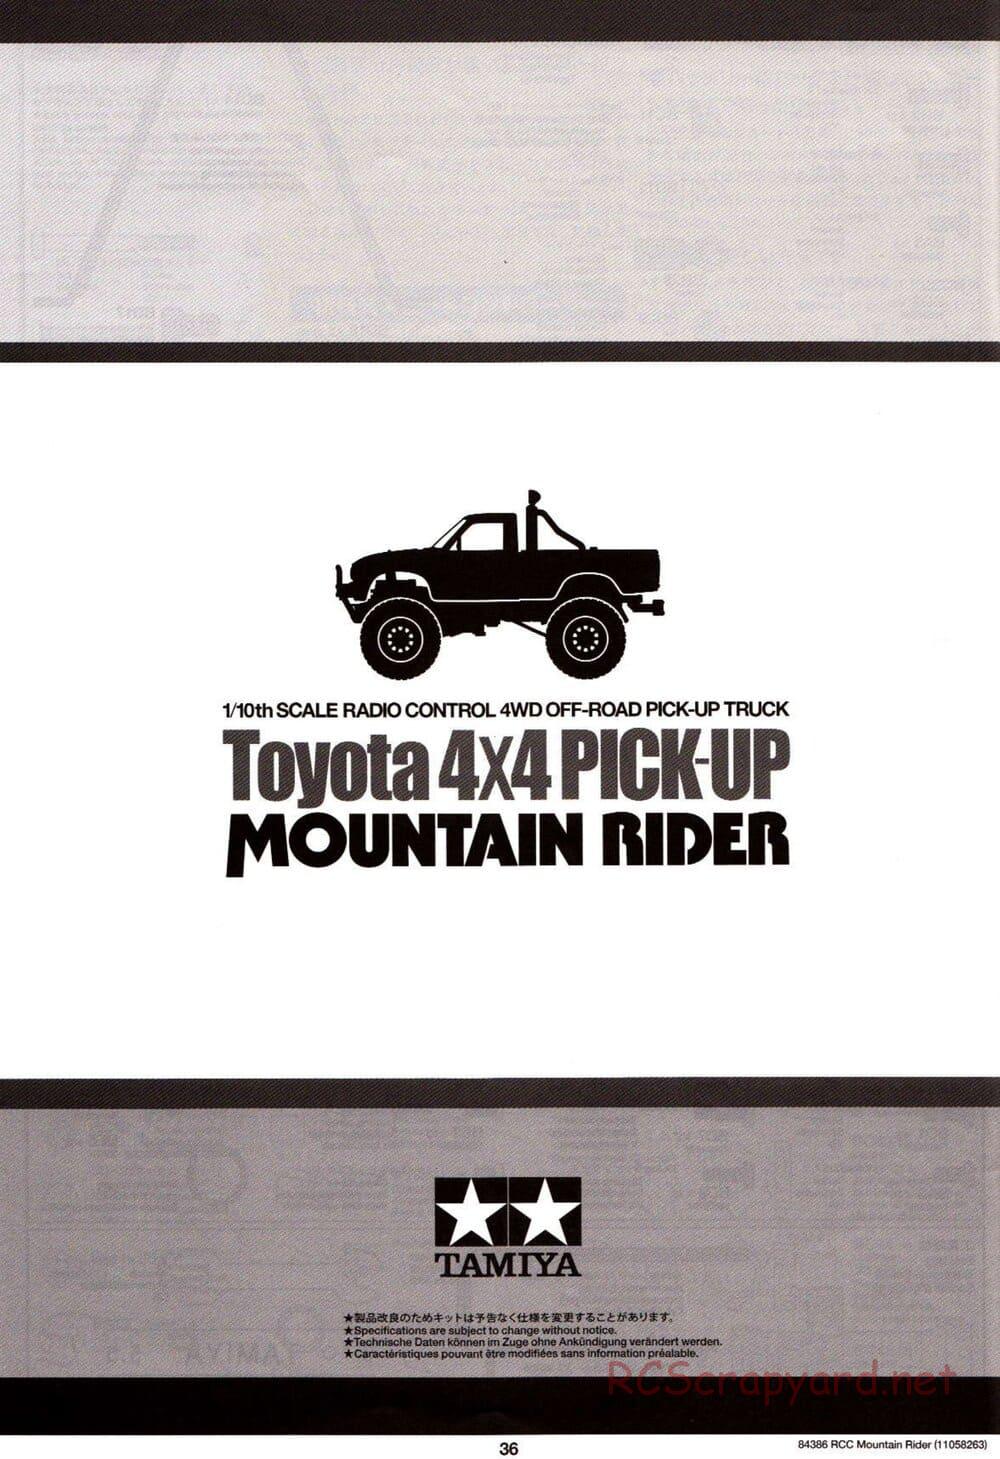 Tamiya - Toyota 4x4 Pick-Up Mountain Rider Chassis - Manual - Page 37